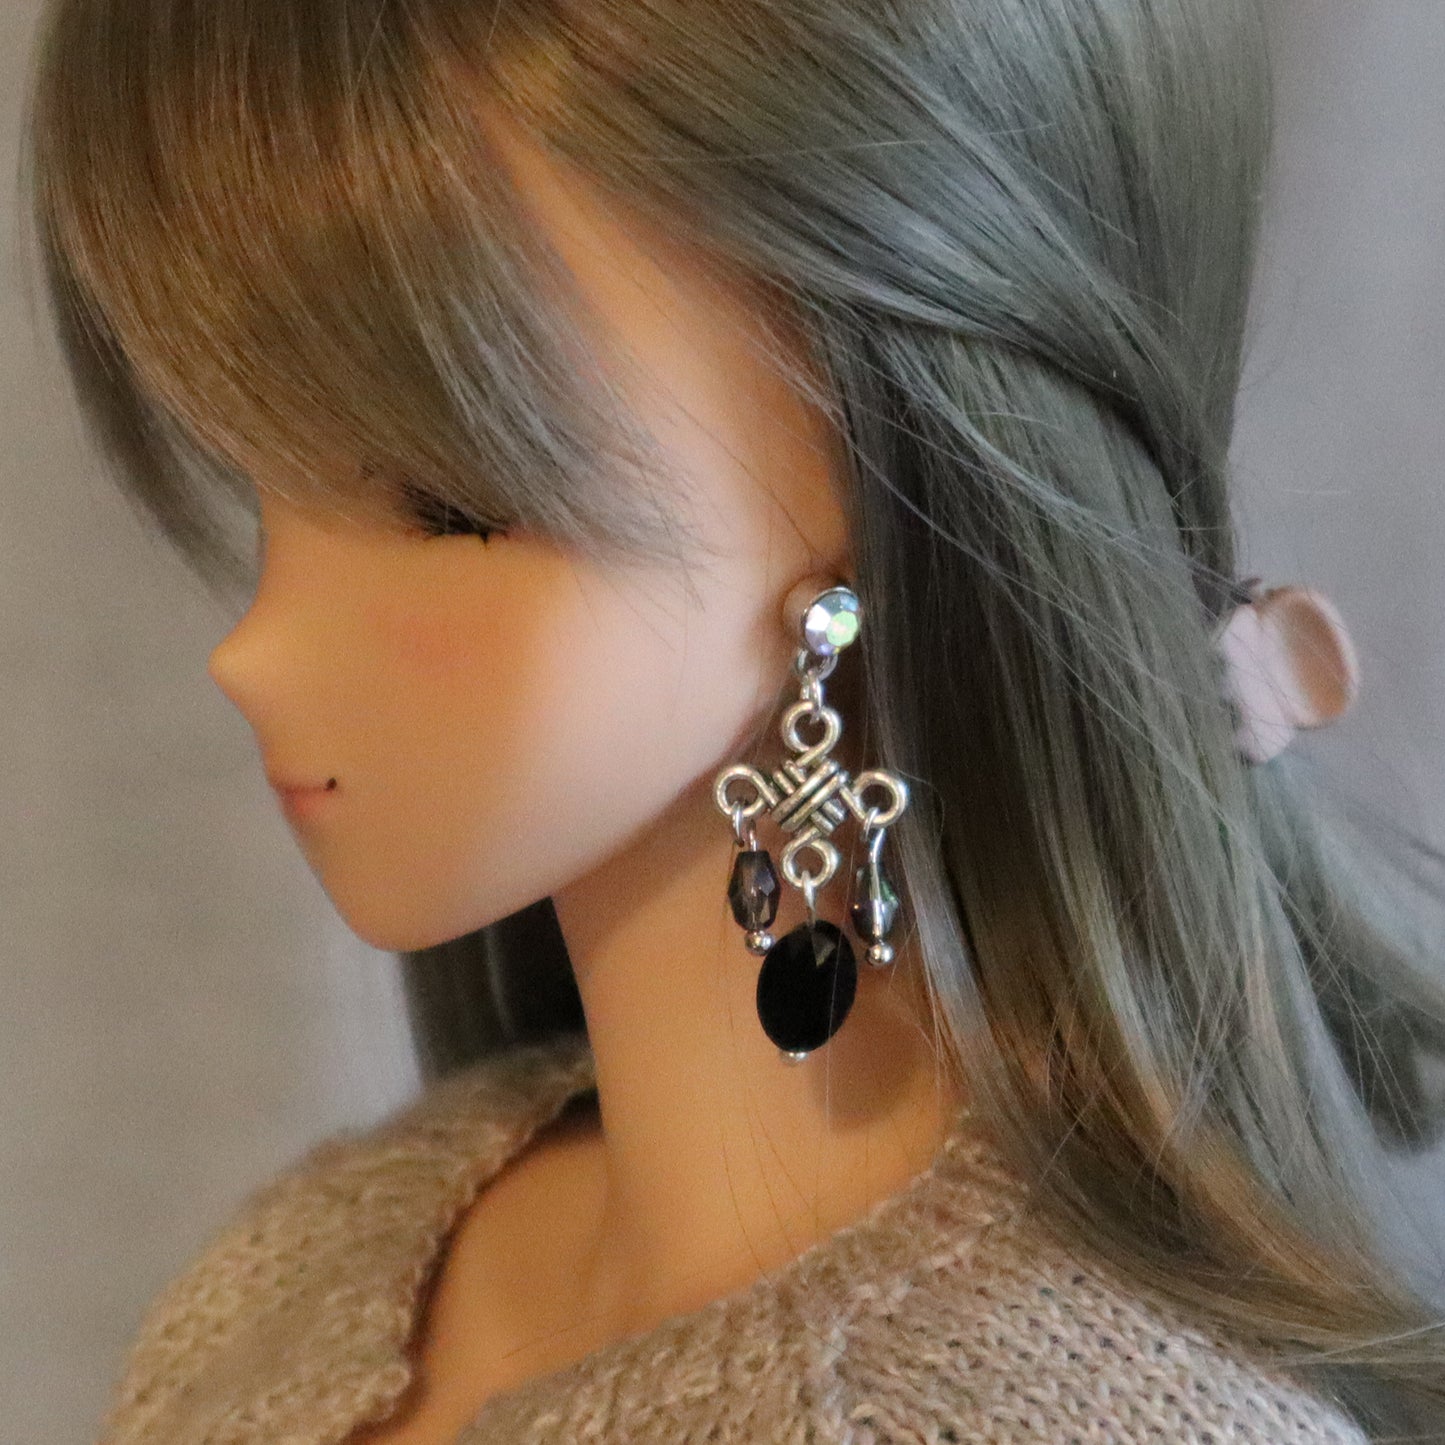 No-Hole Earrings for Vinyl Doll - Knotwork Chandelier (Onyx or Amethyst)